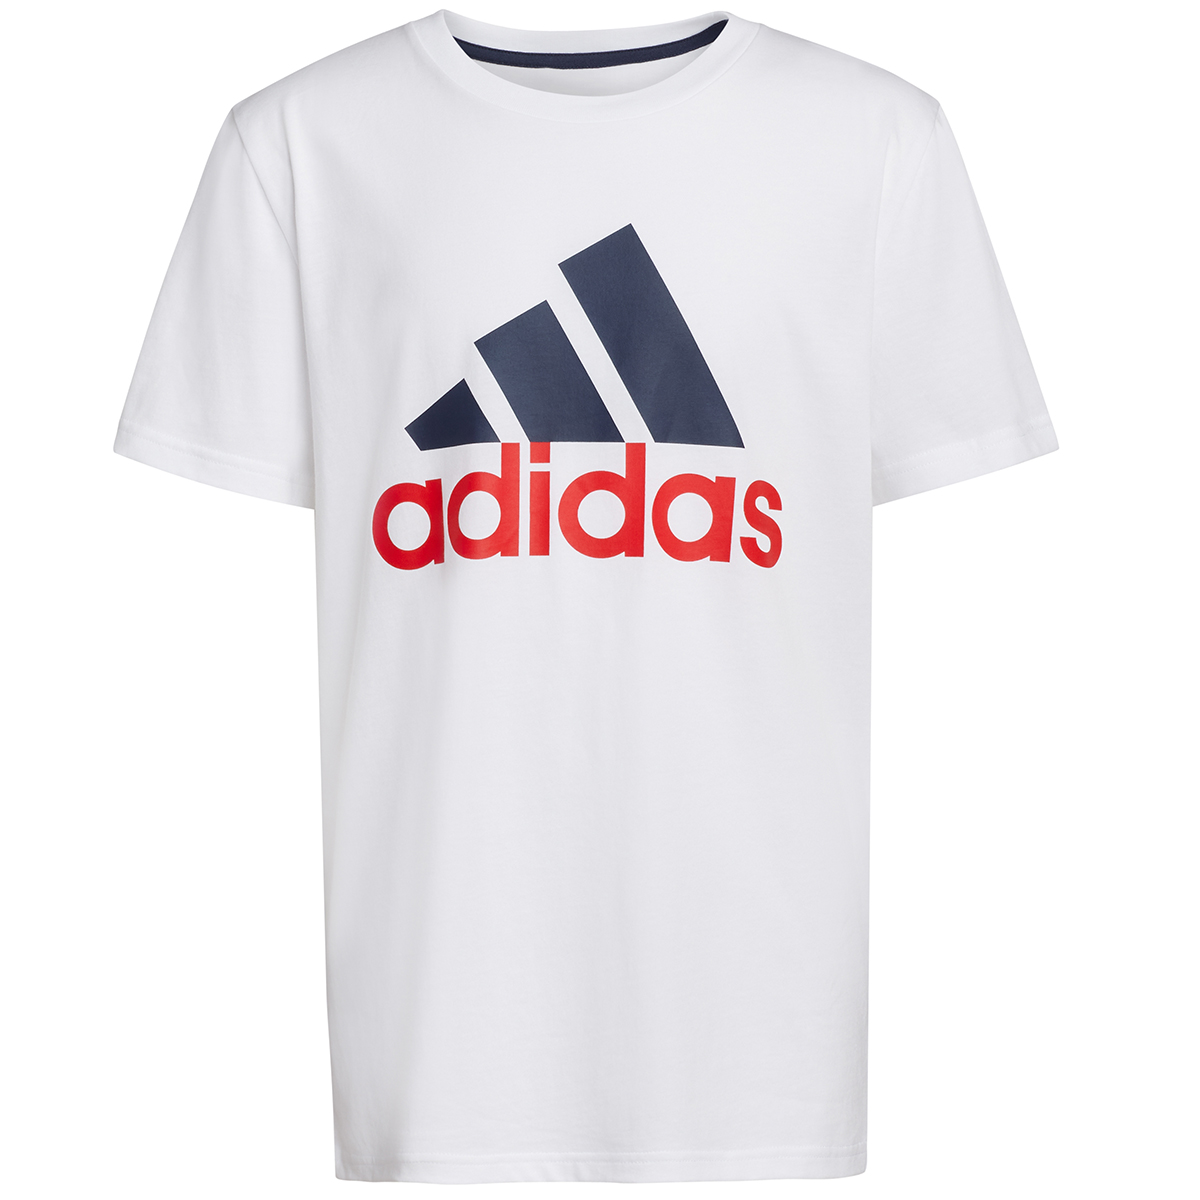 Adidas Boys' Short-Sleeve Graphic Tee